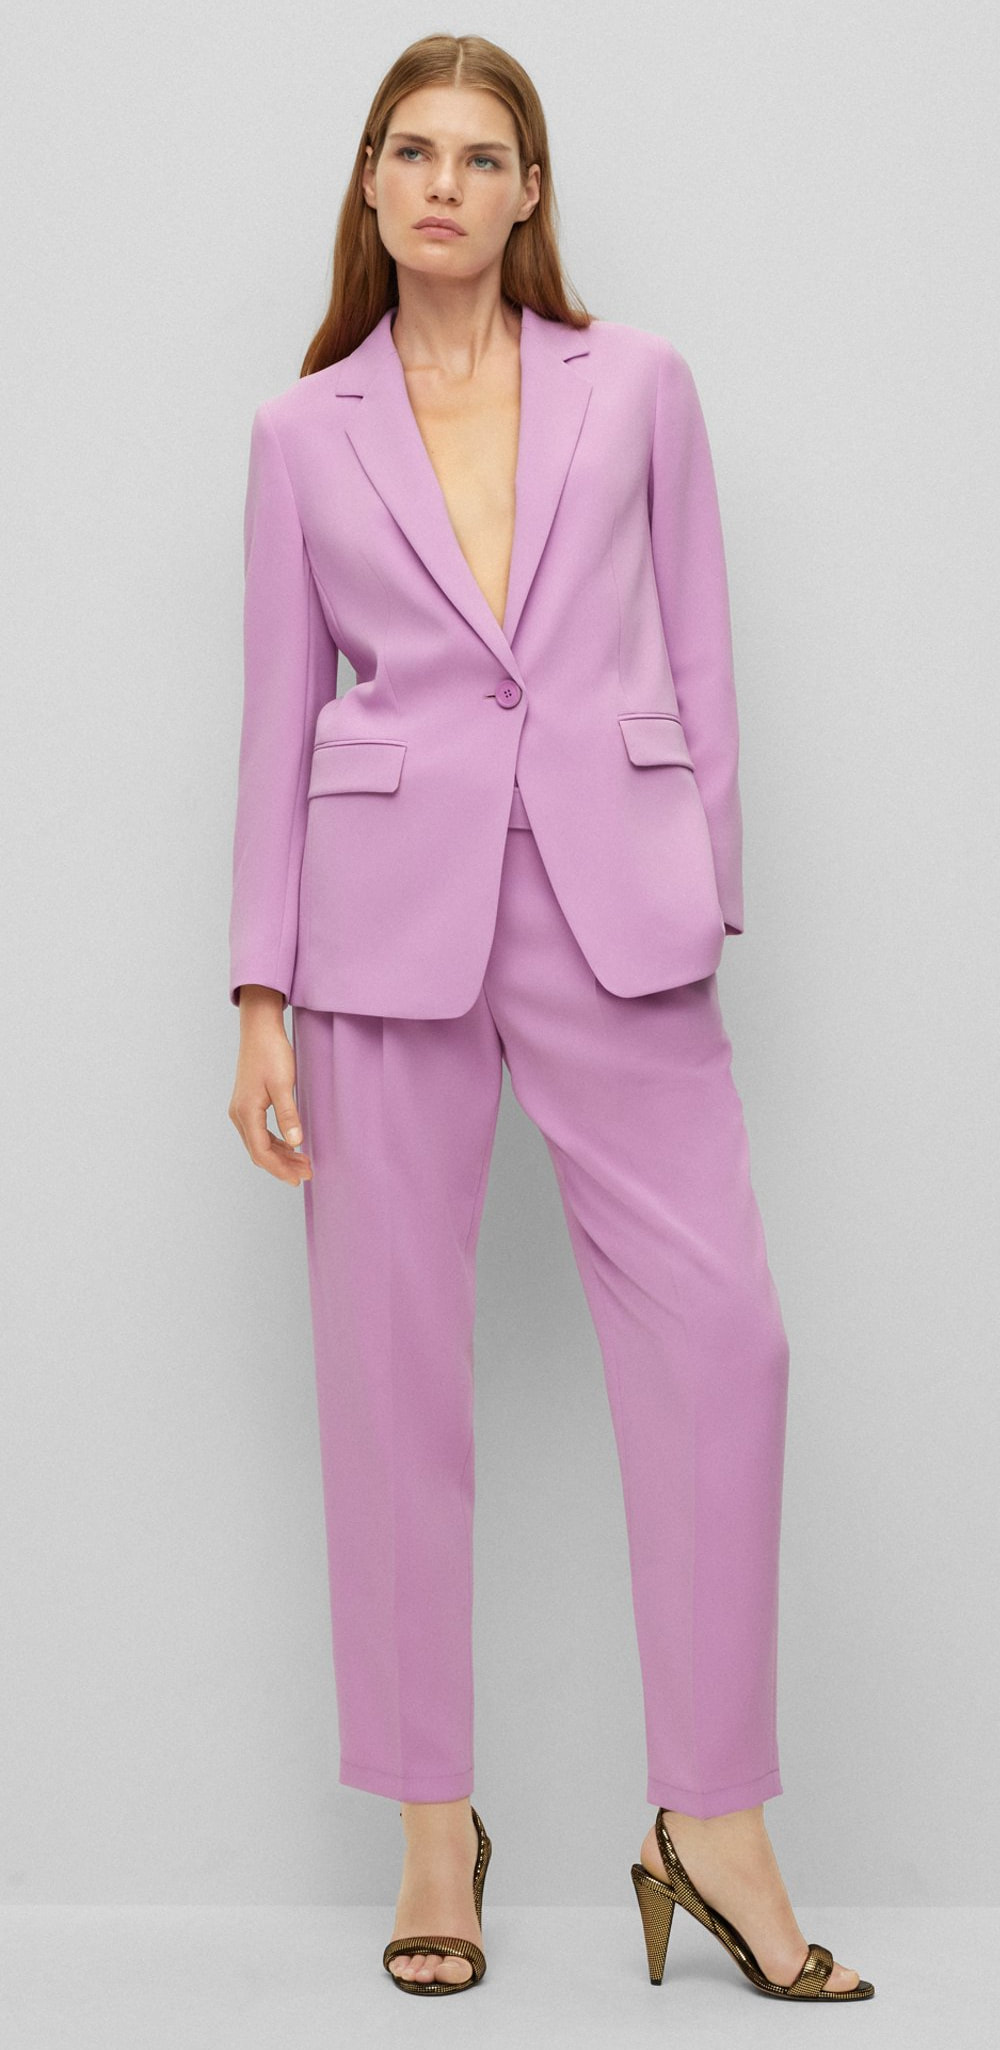 Hugo Boss Jocalua Blazer and Tapia Trousers in Light Pink